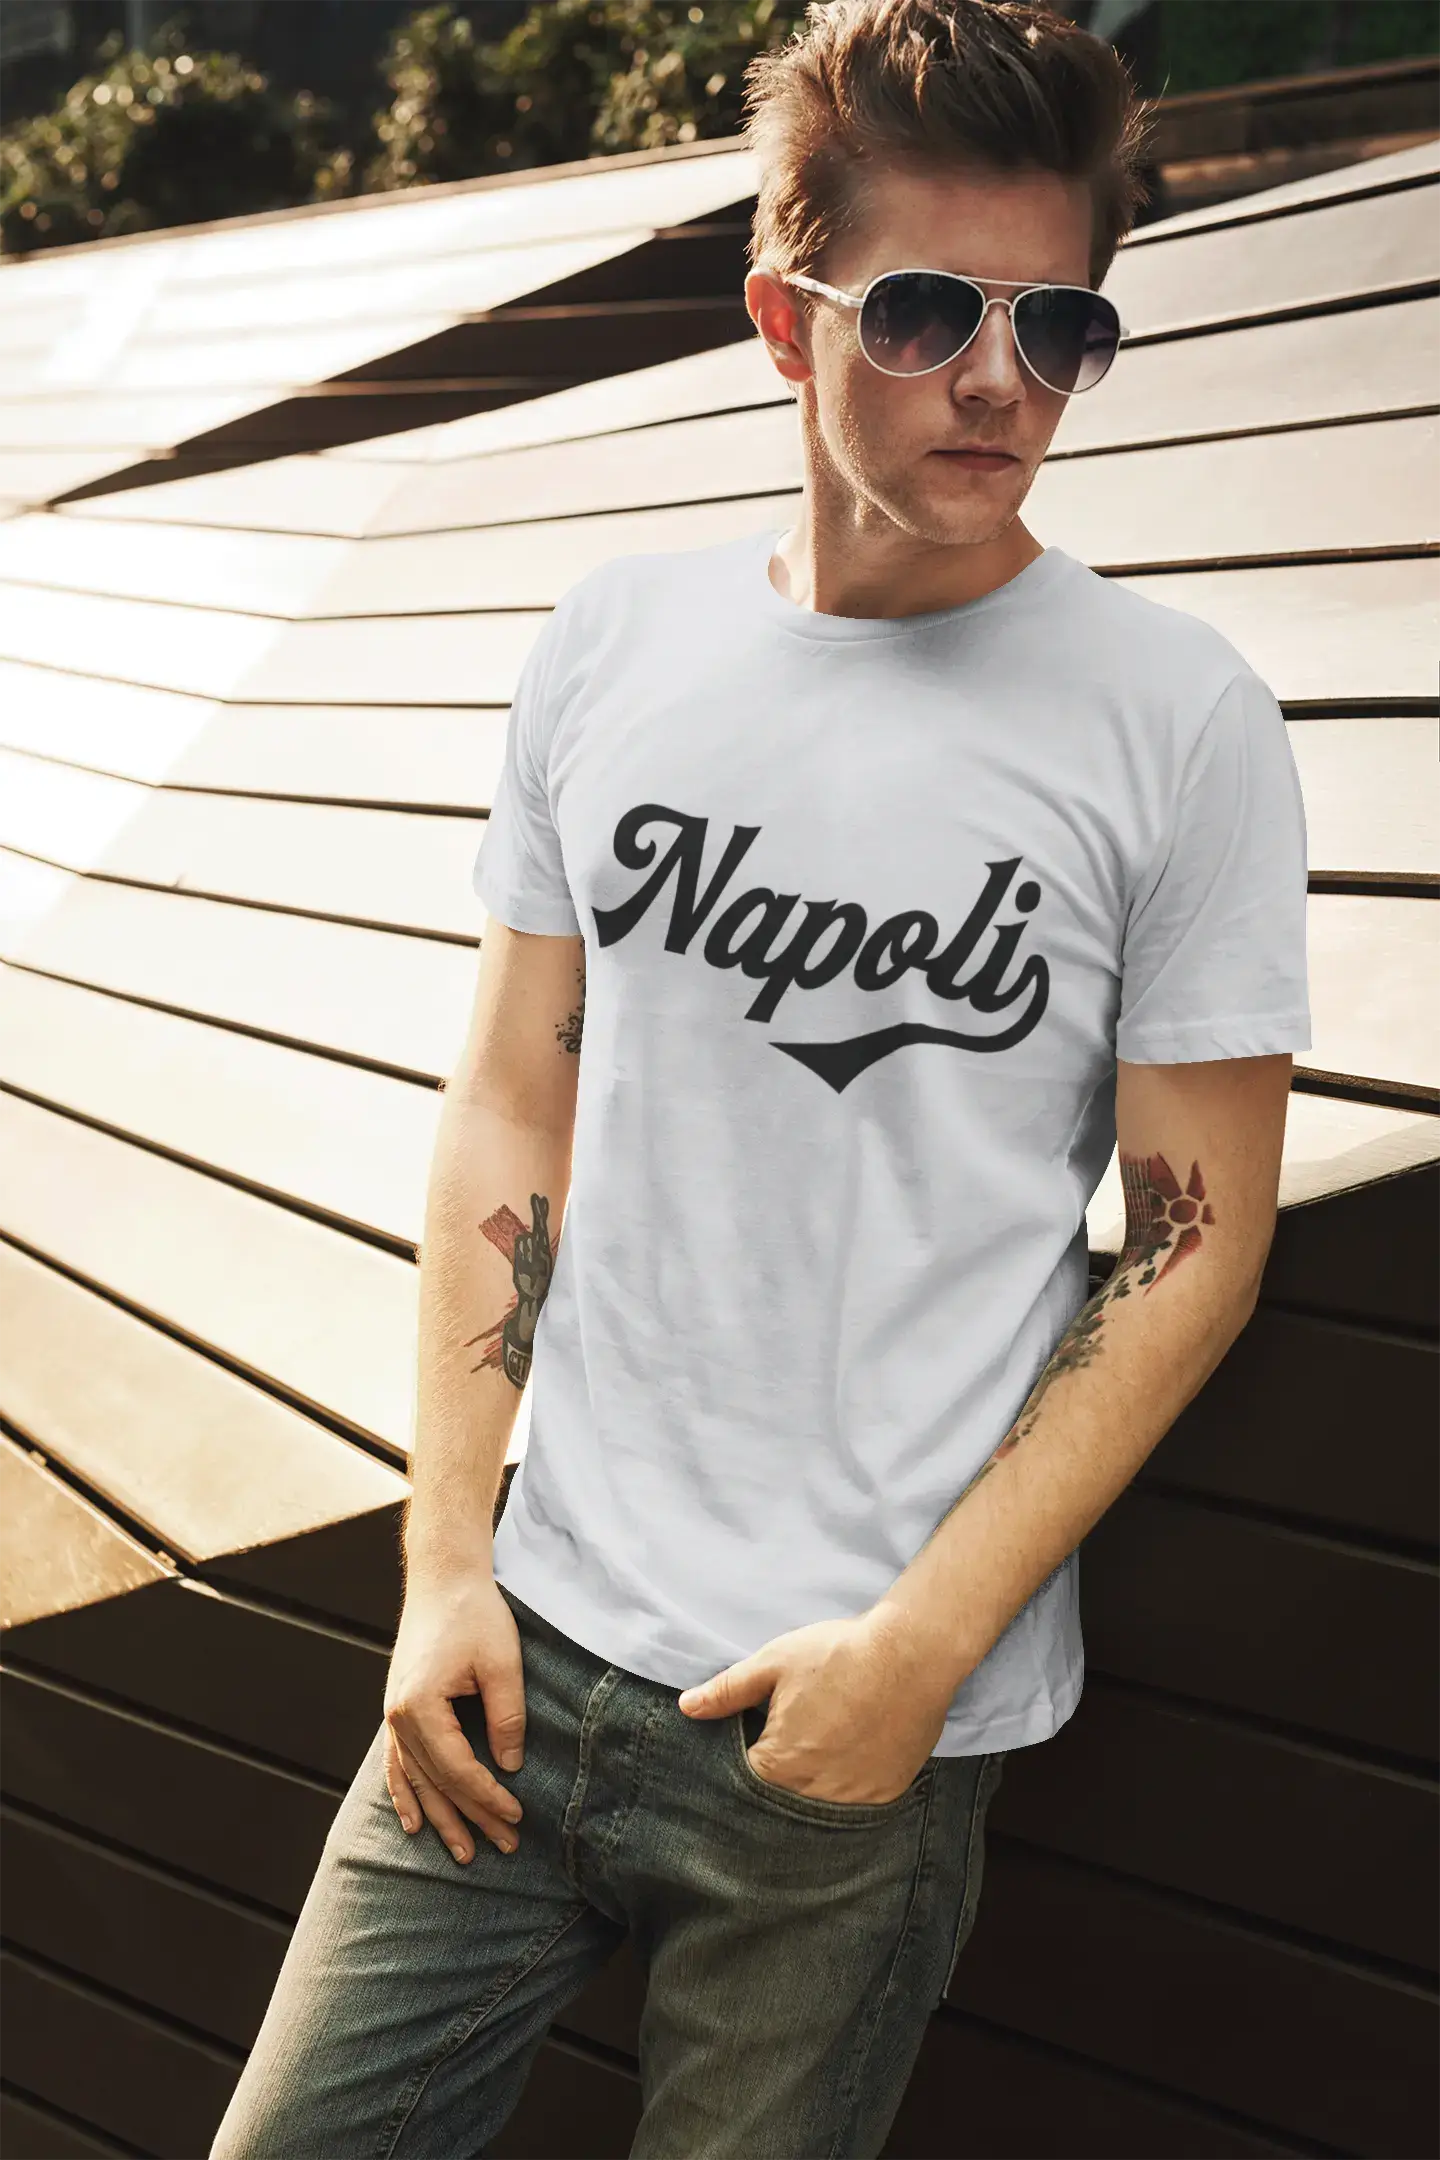 ULTRABASIC - Graphic Printed Men's Napoli T-Shirt Navy